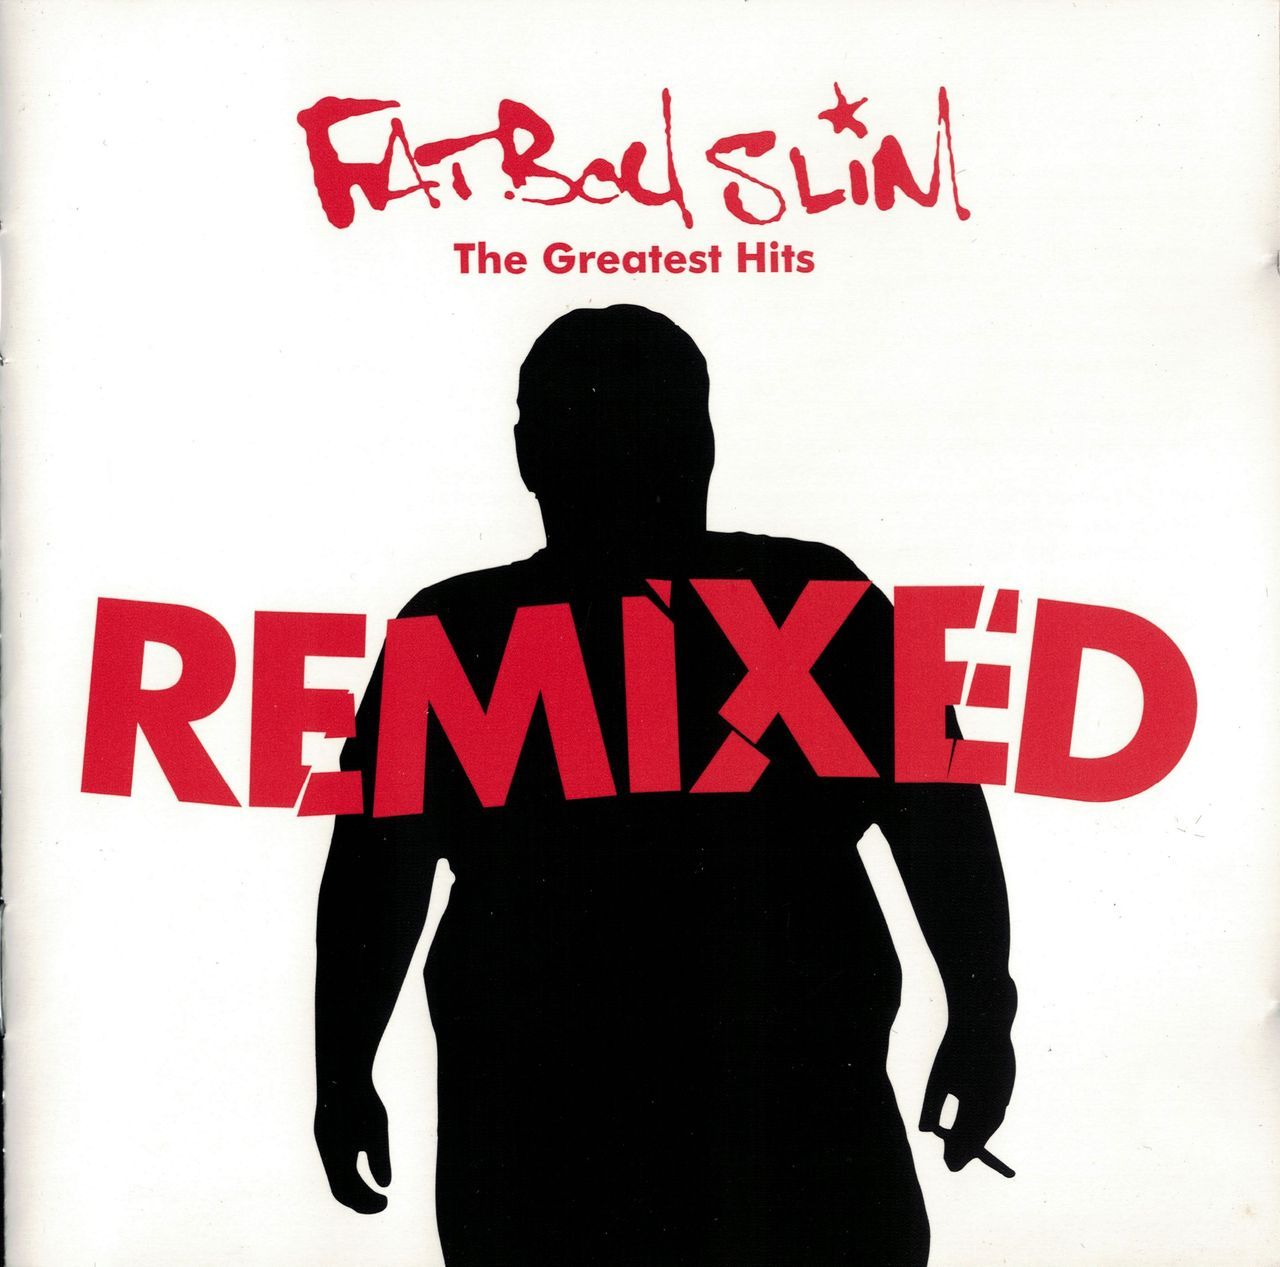 The Greatest Hits Remixed album art